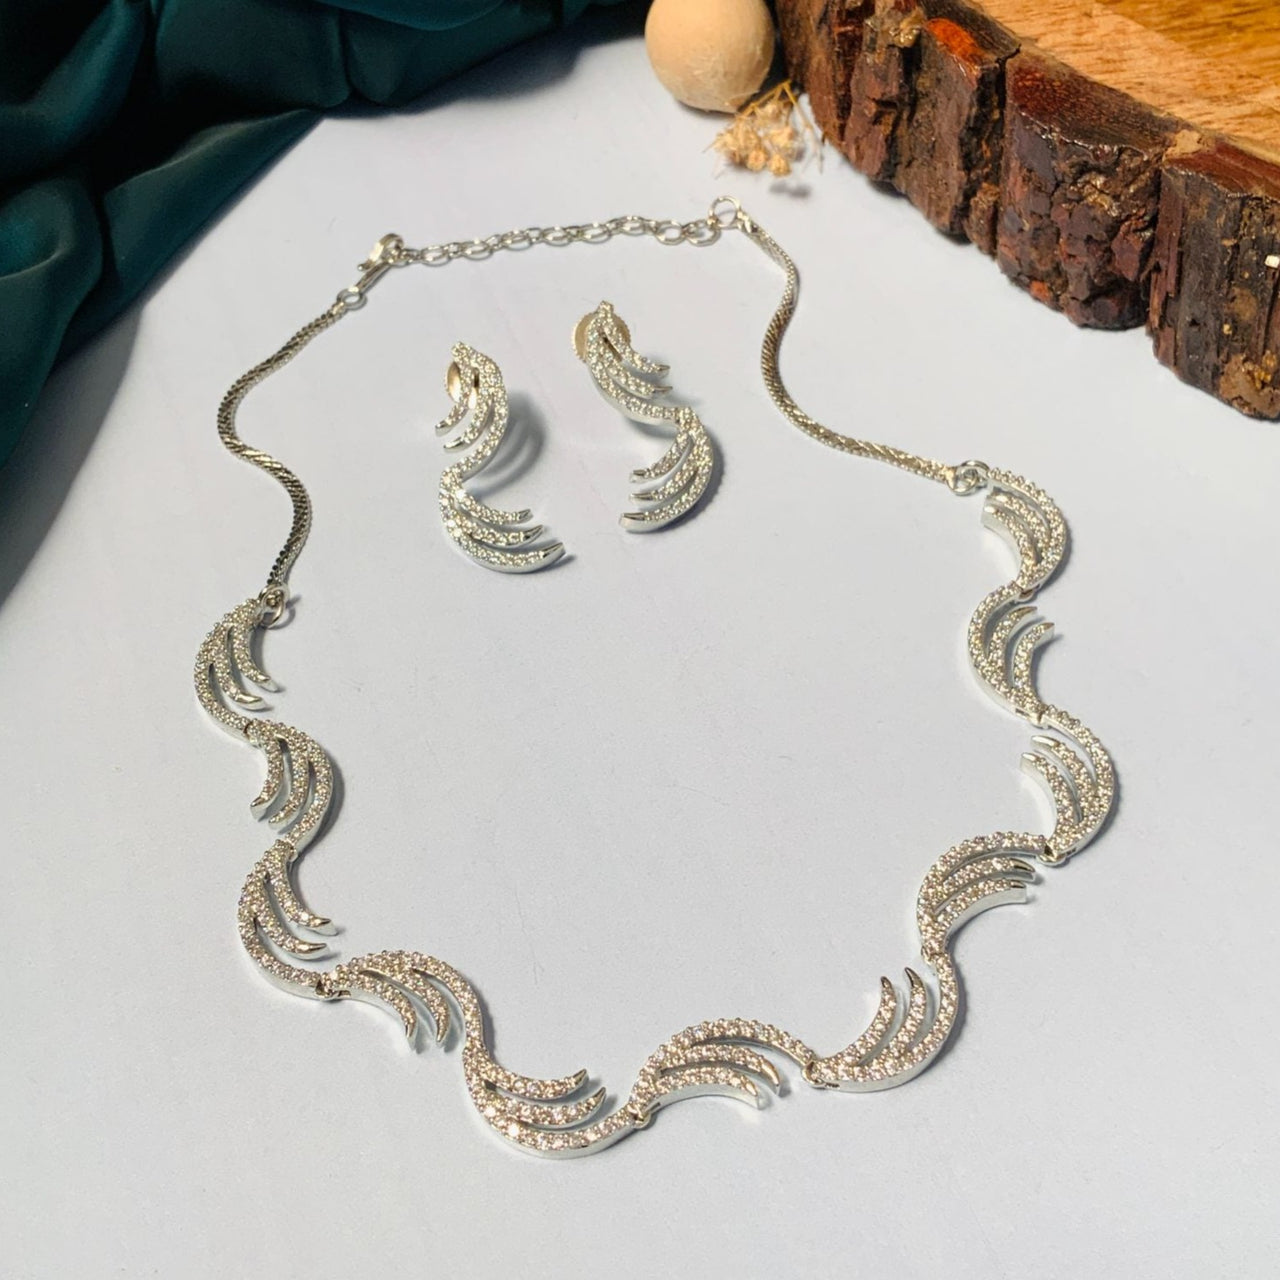 Tribal Statement designer boho pendant necklace earrings set at ₹3450 |  Azilaa